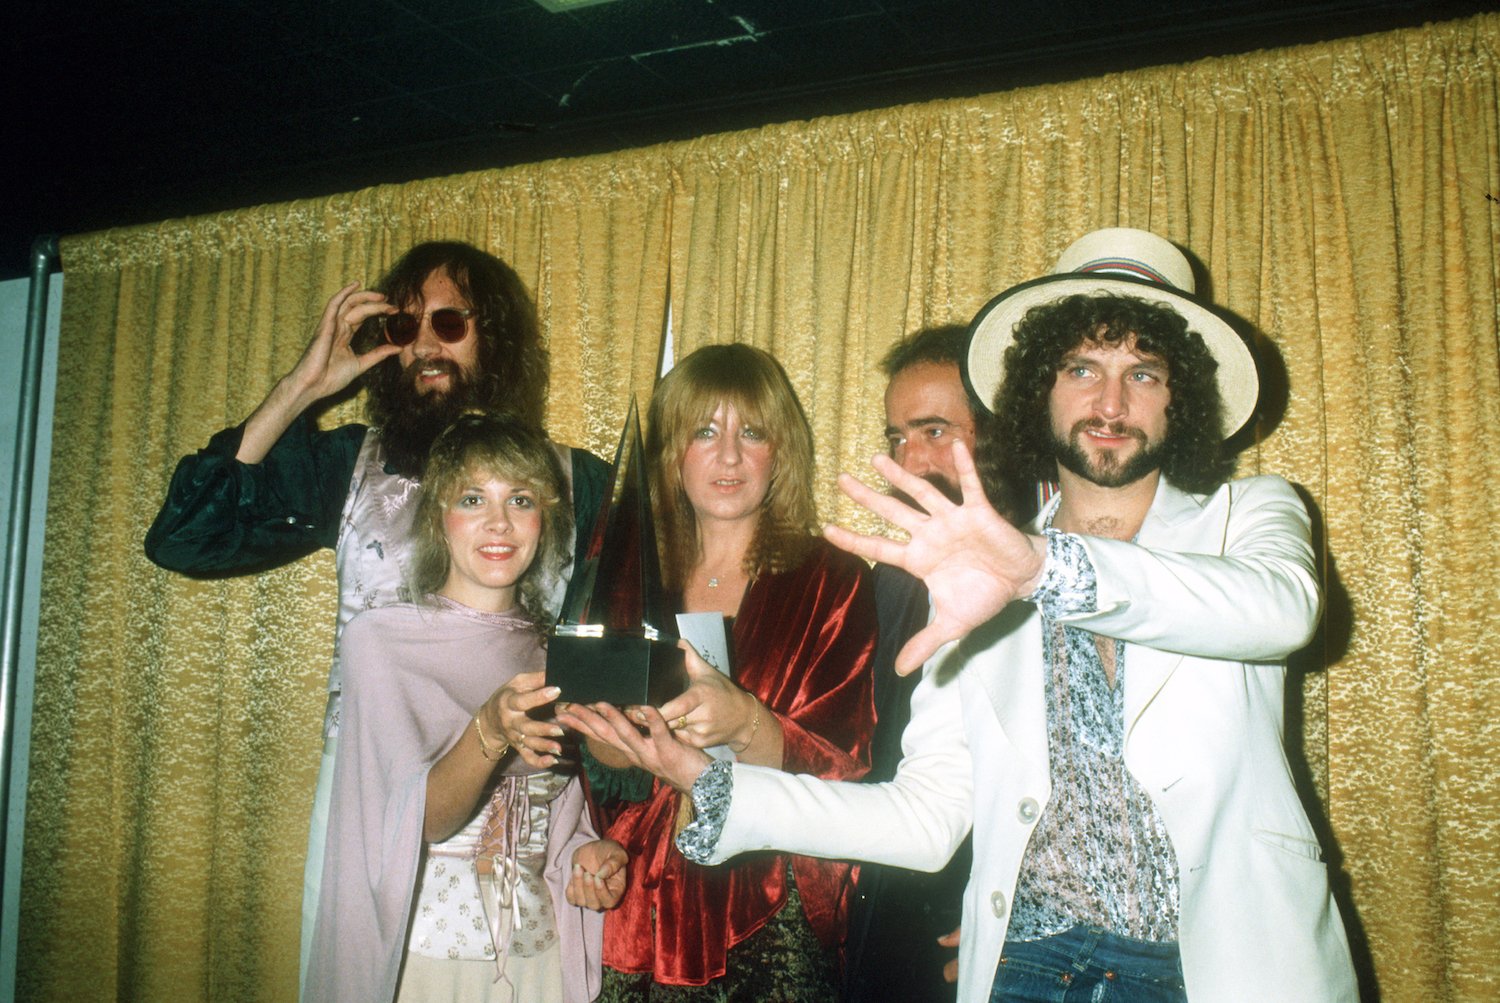 Fleetwood Mac (members Mick Fleetwood, Stevie Nicks, Christine McVie, John McVie and Lindsey Buckingham) pose backstage at the 5th American Music Awards.